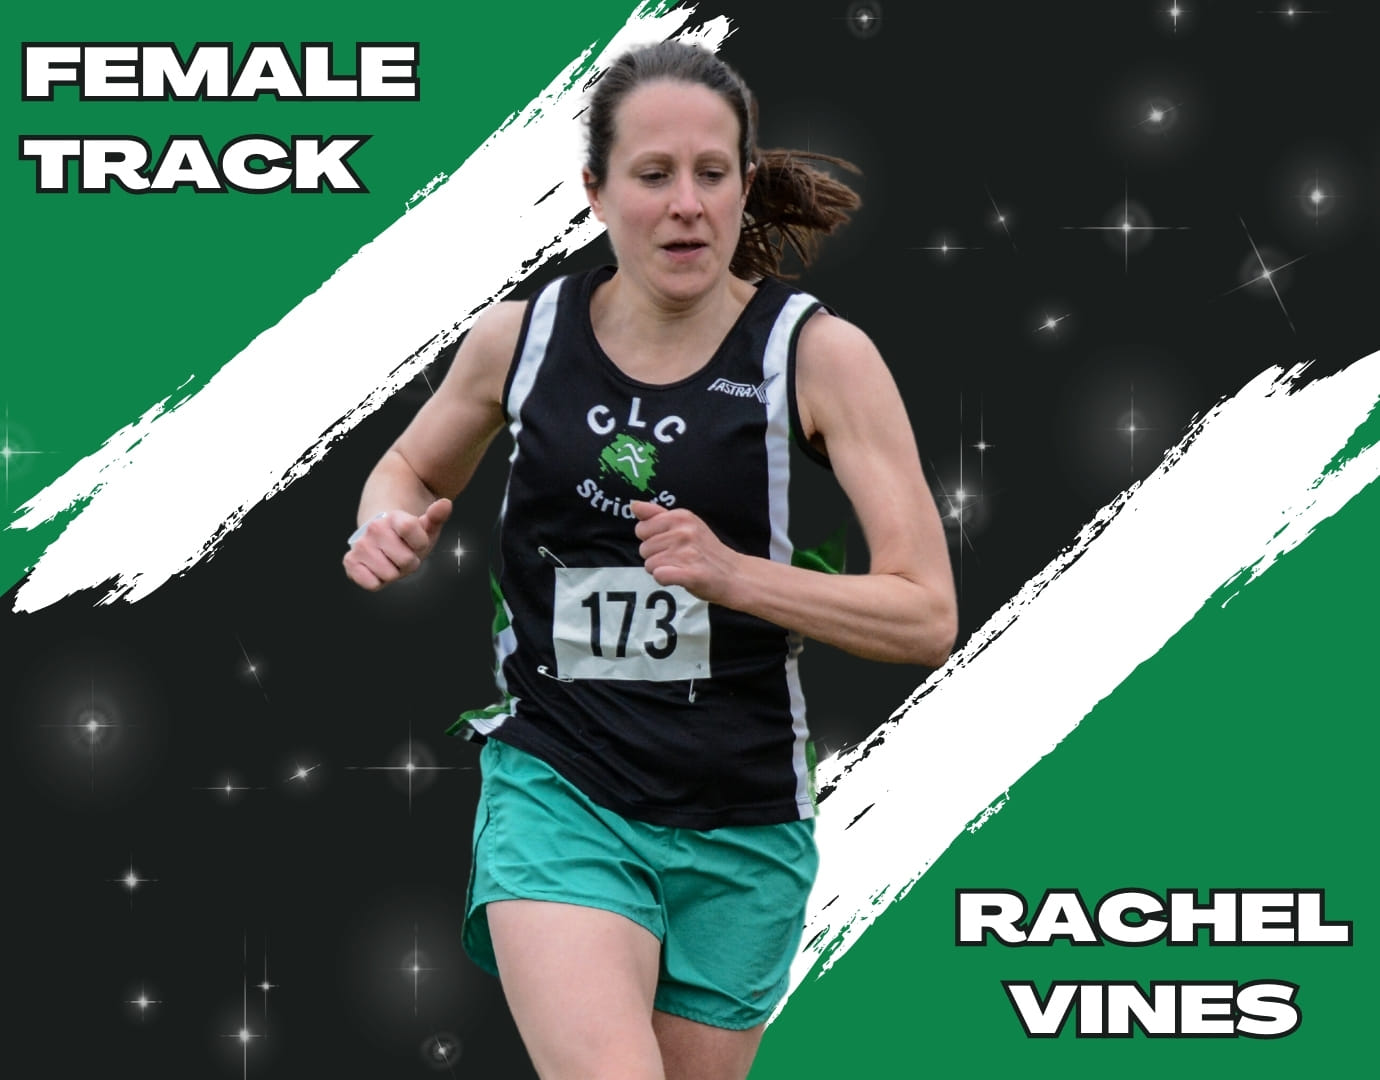 Female Track Rachel Vines